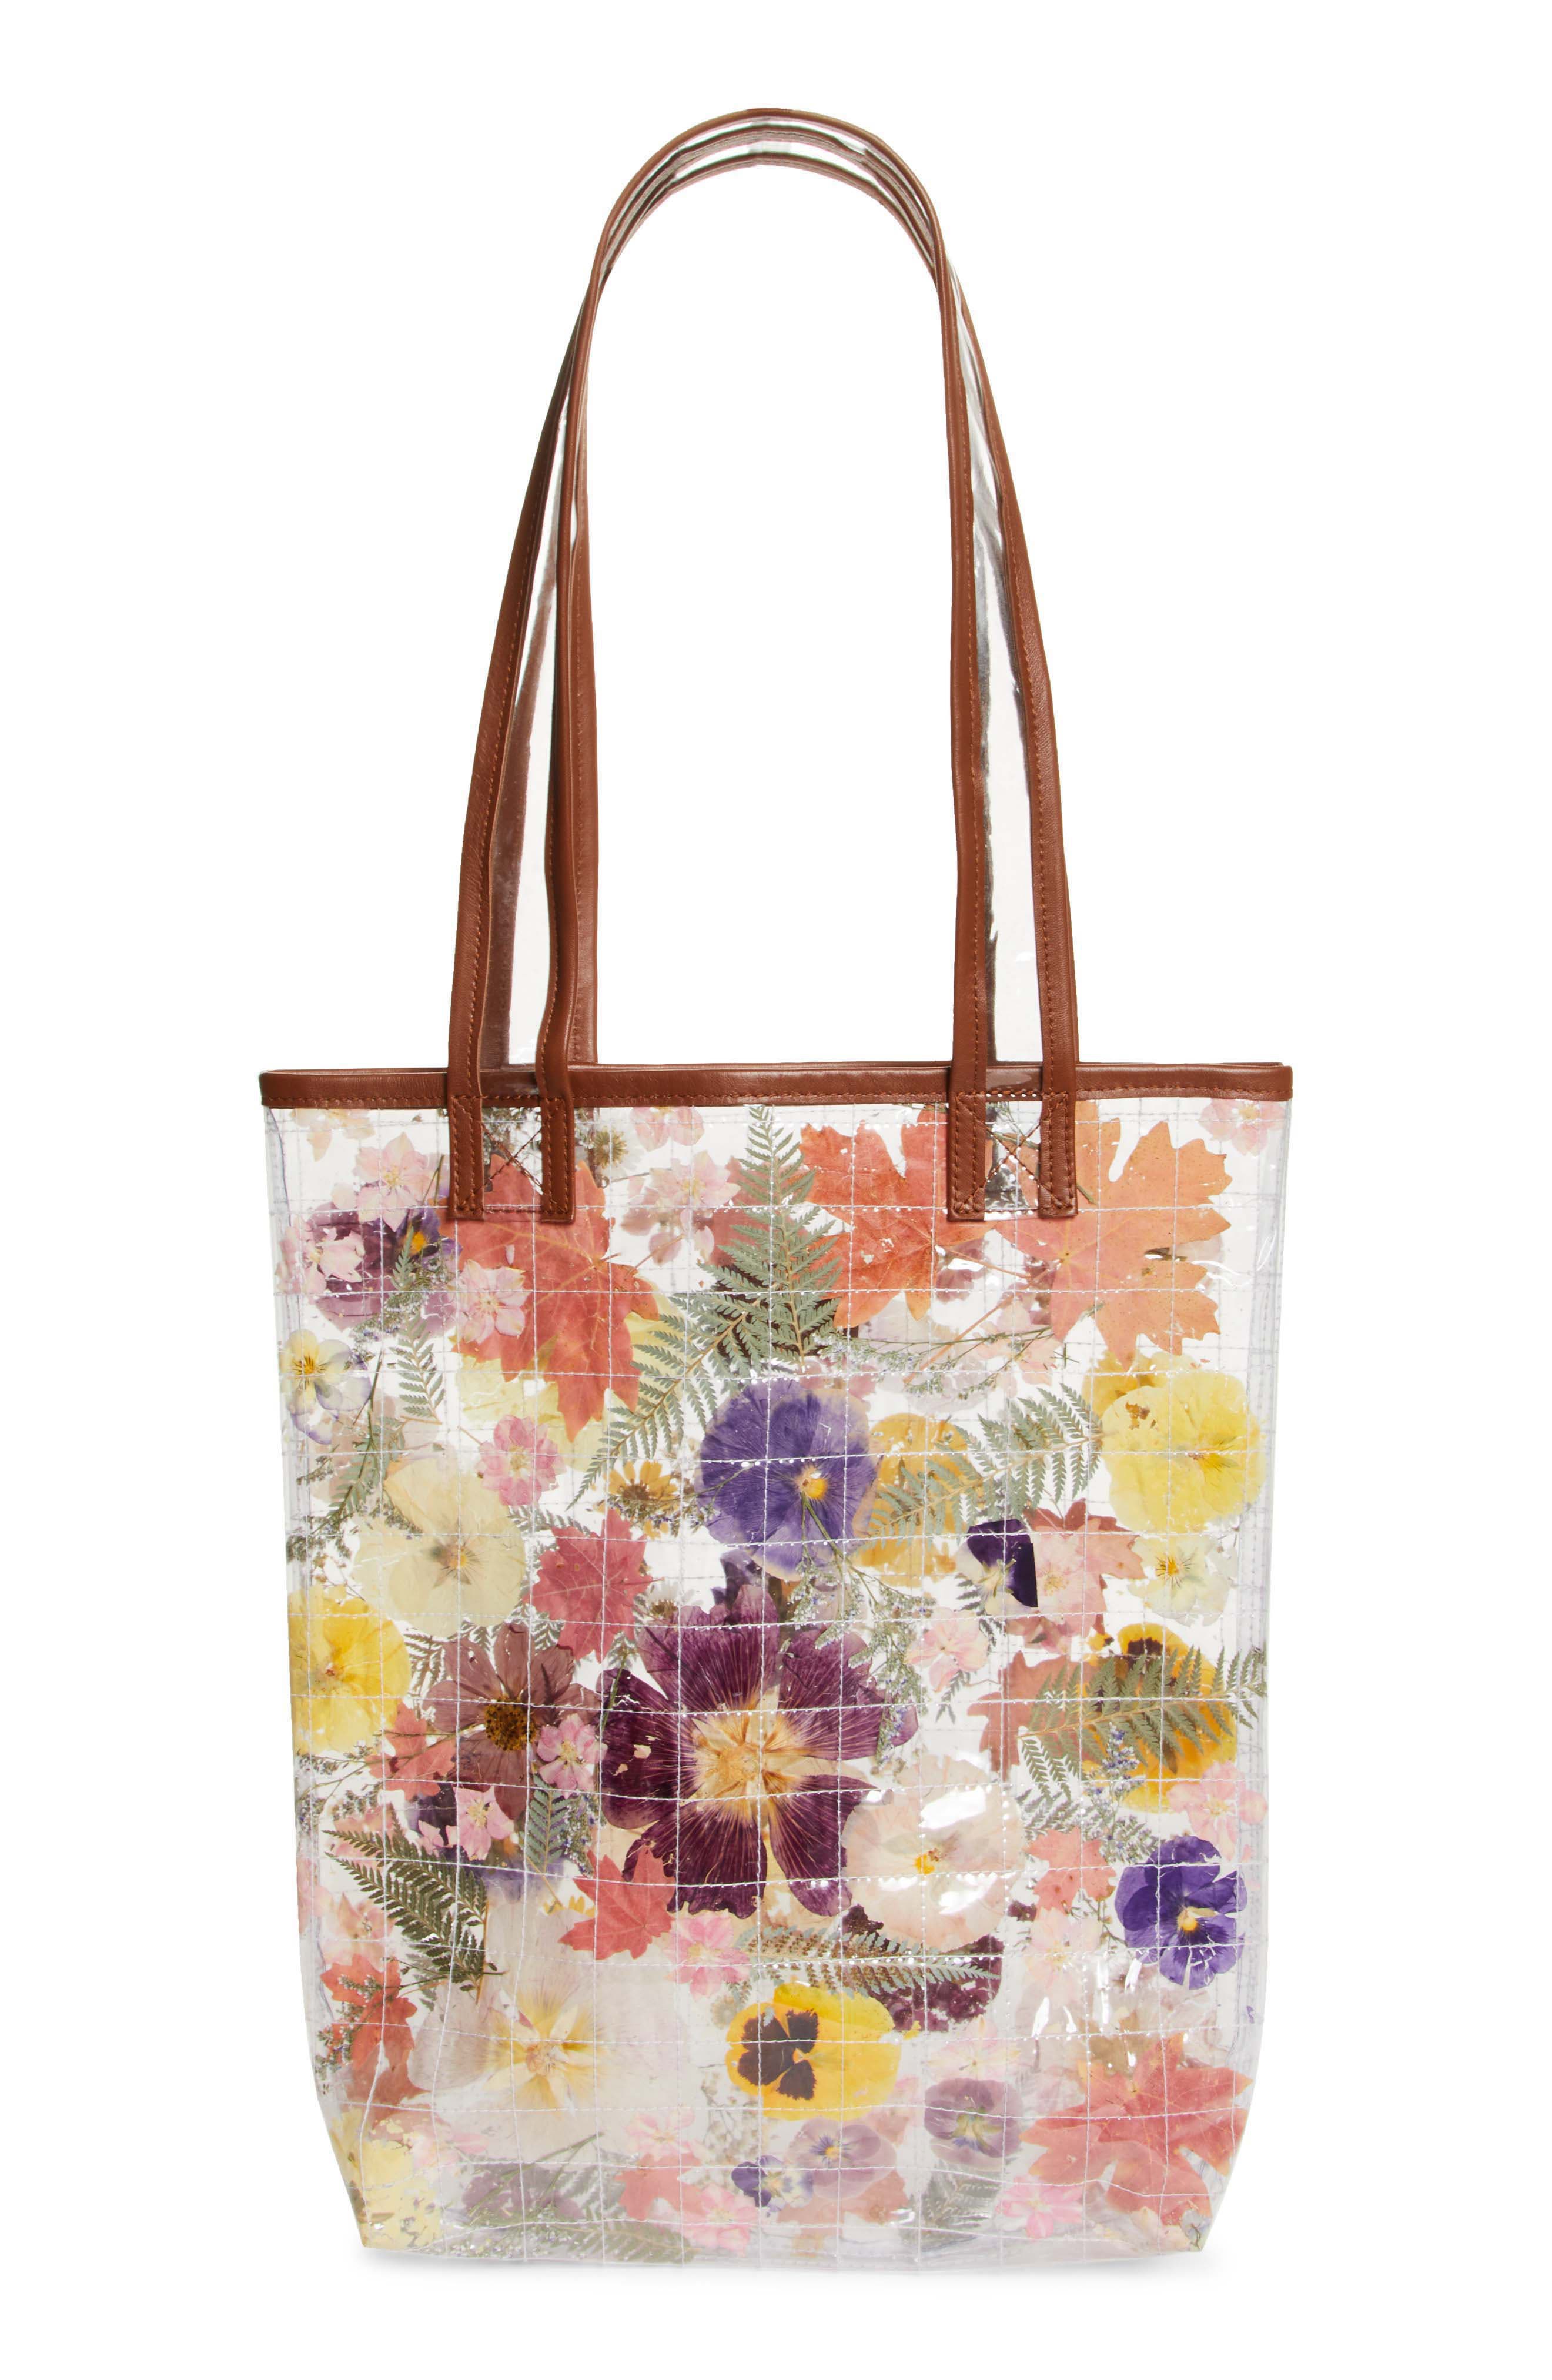 My Daily Women Tote Shoulder Bag Spring Multicolored Flowers Watercolor Handbag Large 